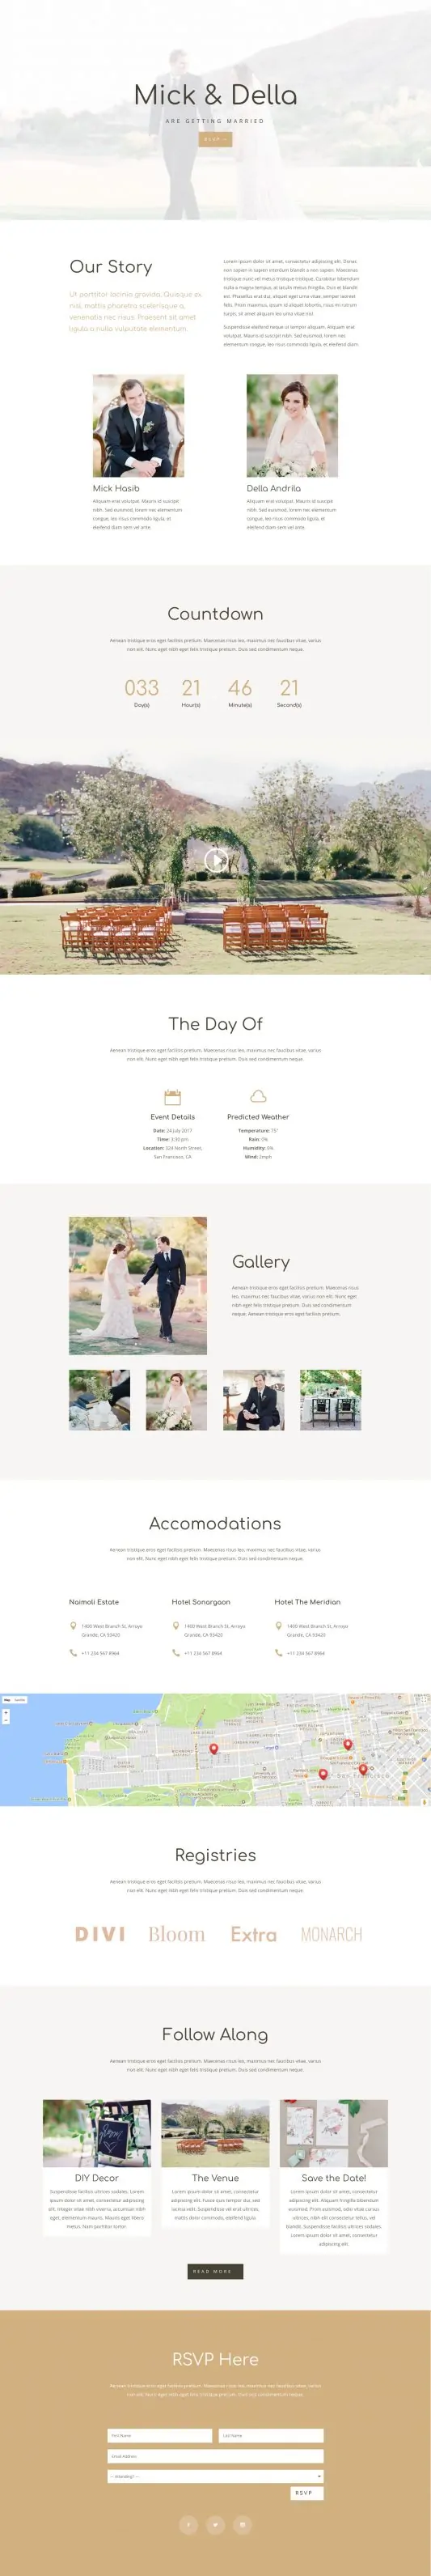 Wedding Web Design 6